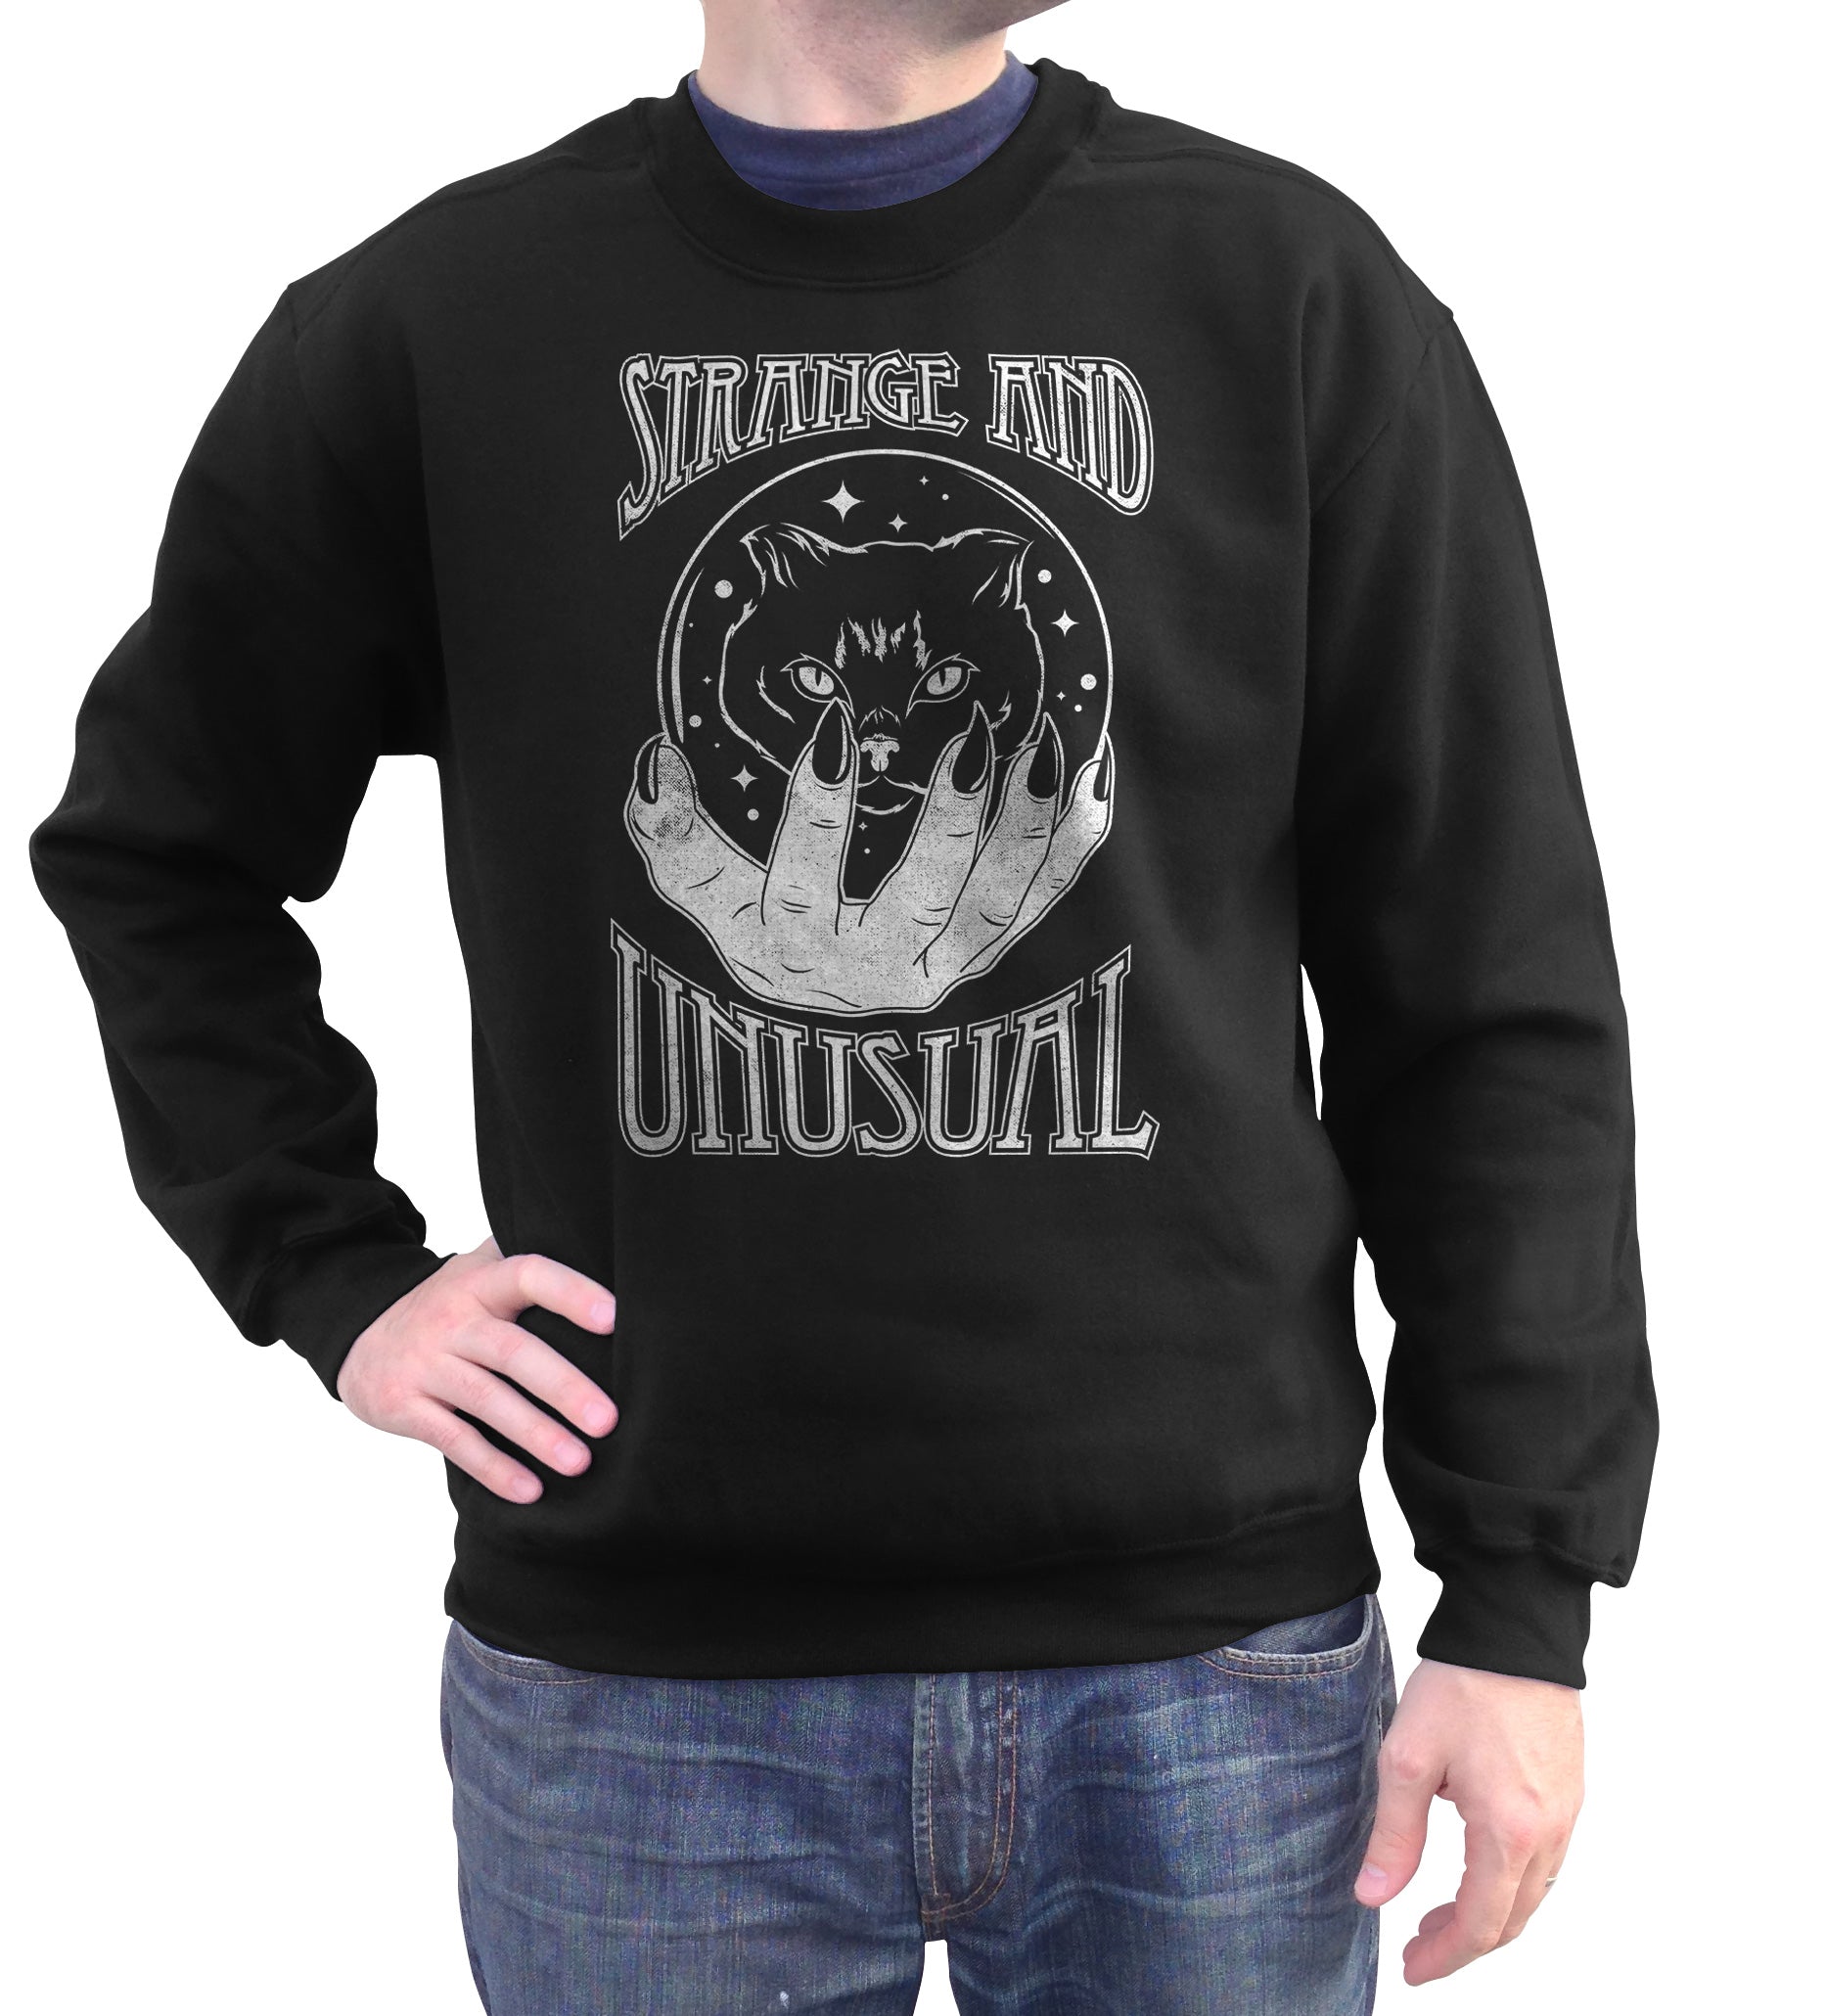 Unisex Strange and Unusual Sweatshirt - Occult shirt - Pastel Goth Shirt - Black Cat Shirt